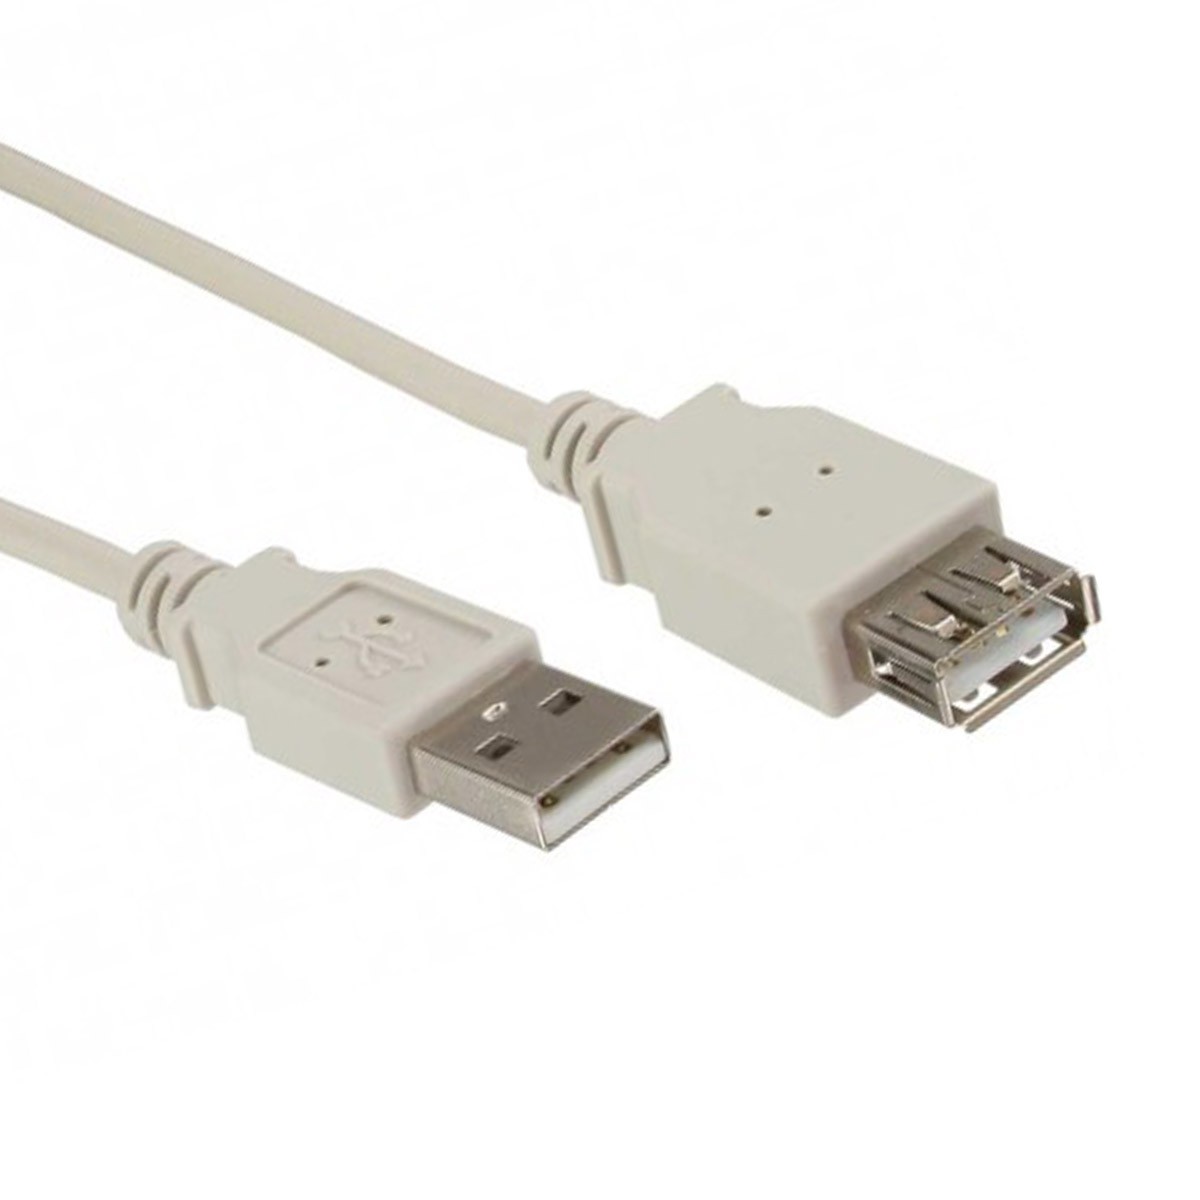 Connectland EXT-USB-V3-1M Rallonge USB v3.0 A mâle vers A femelle 1m